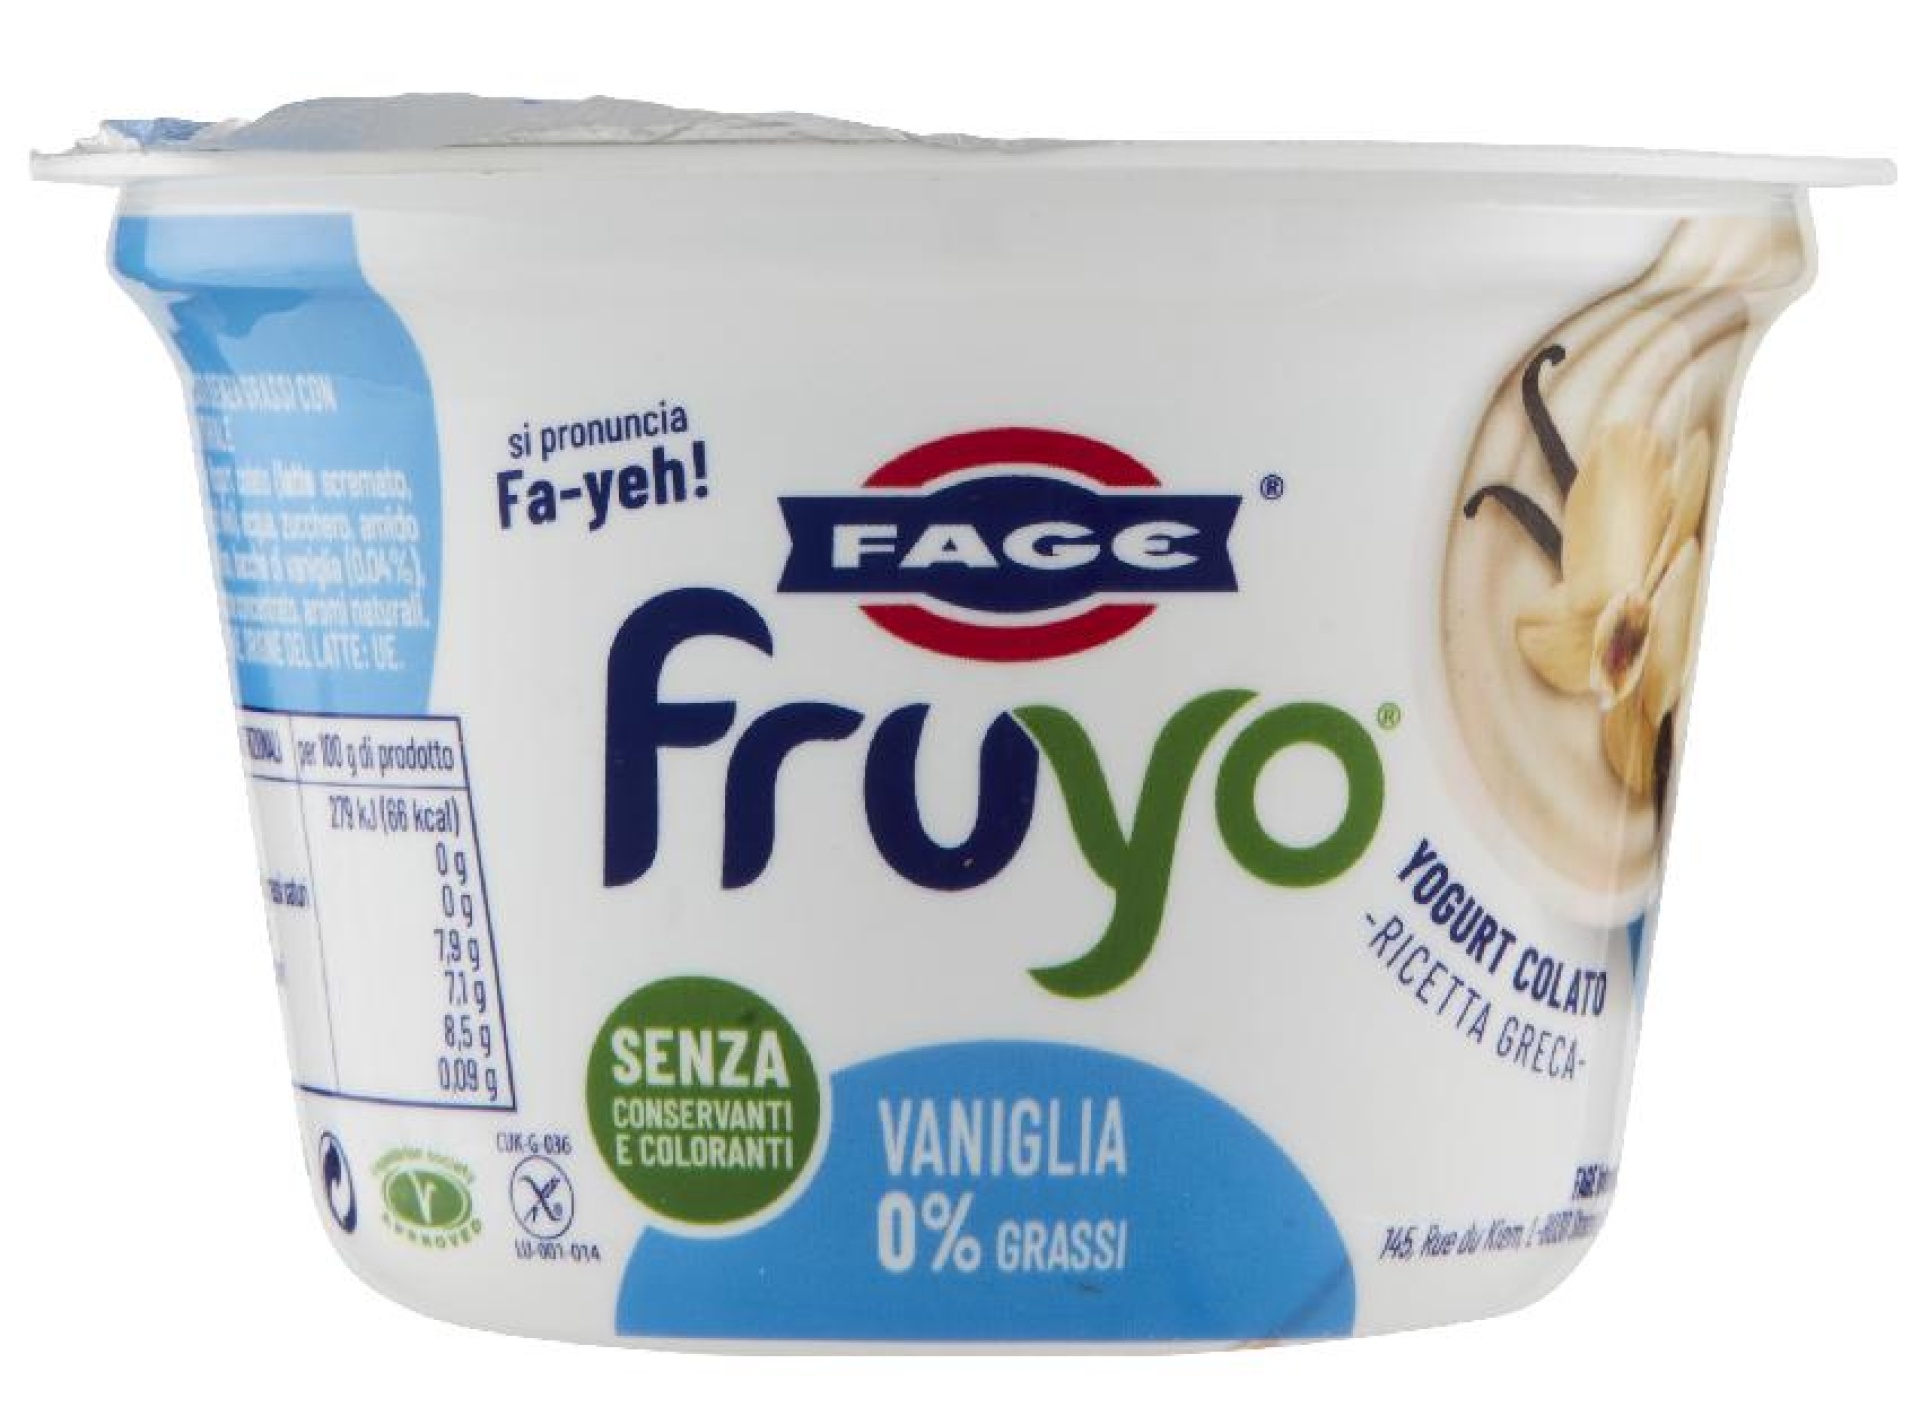 Vendita YOGURT GRECO 0% GRASSI e all'ingrosso. Yogurt & dessert